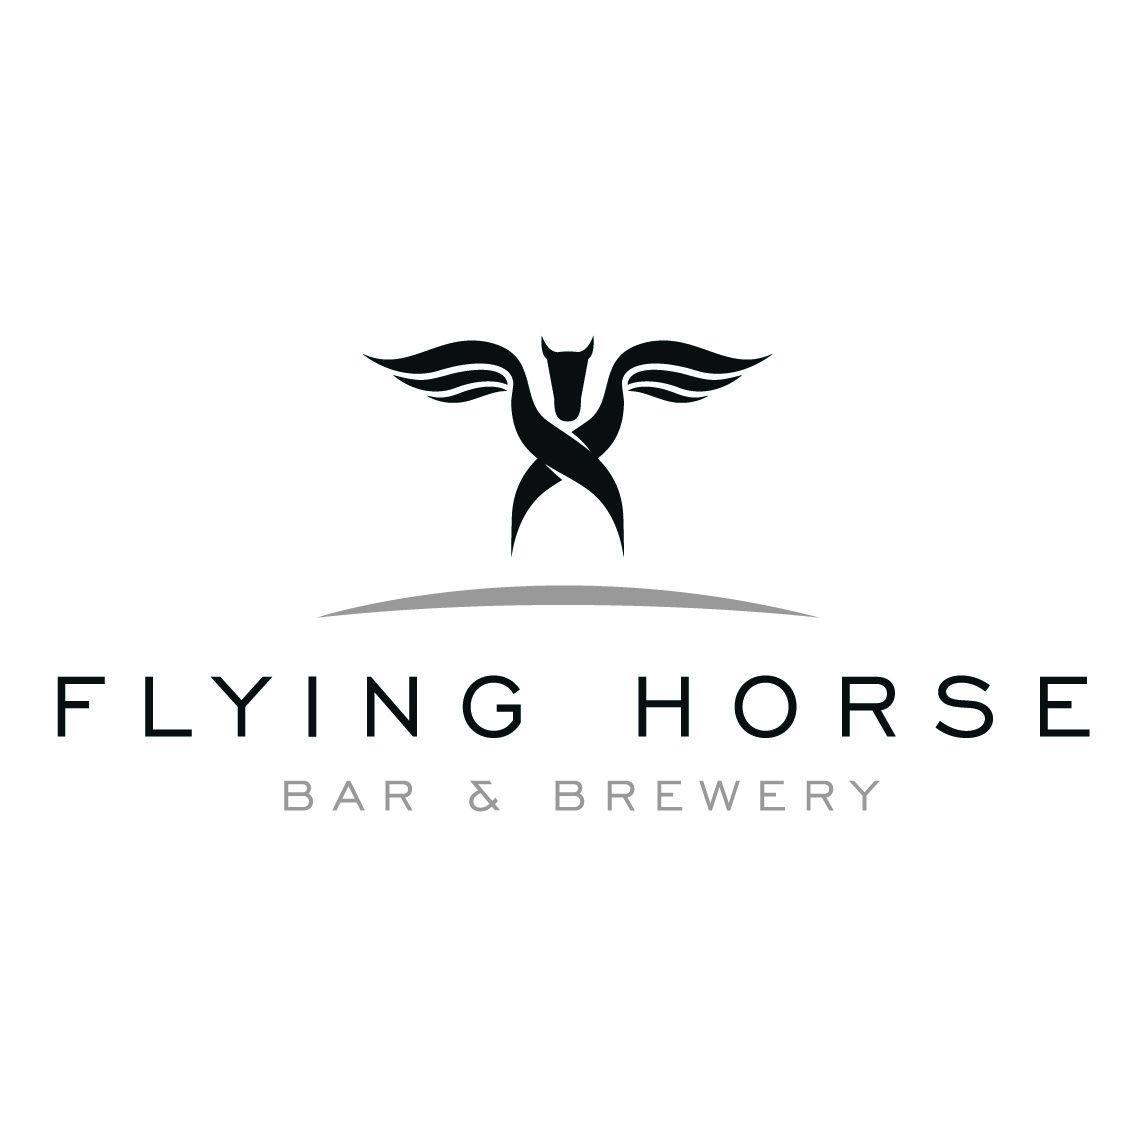 Flying Horse Beer Logo - Flying Horse Bar & Brewery